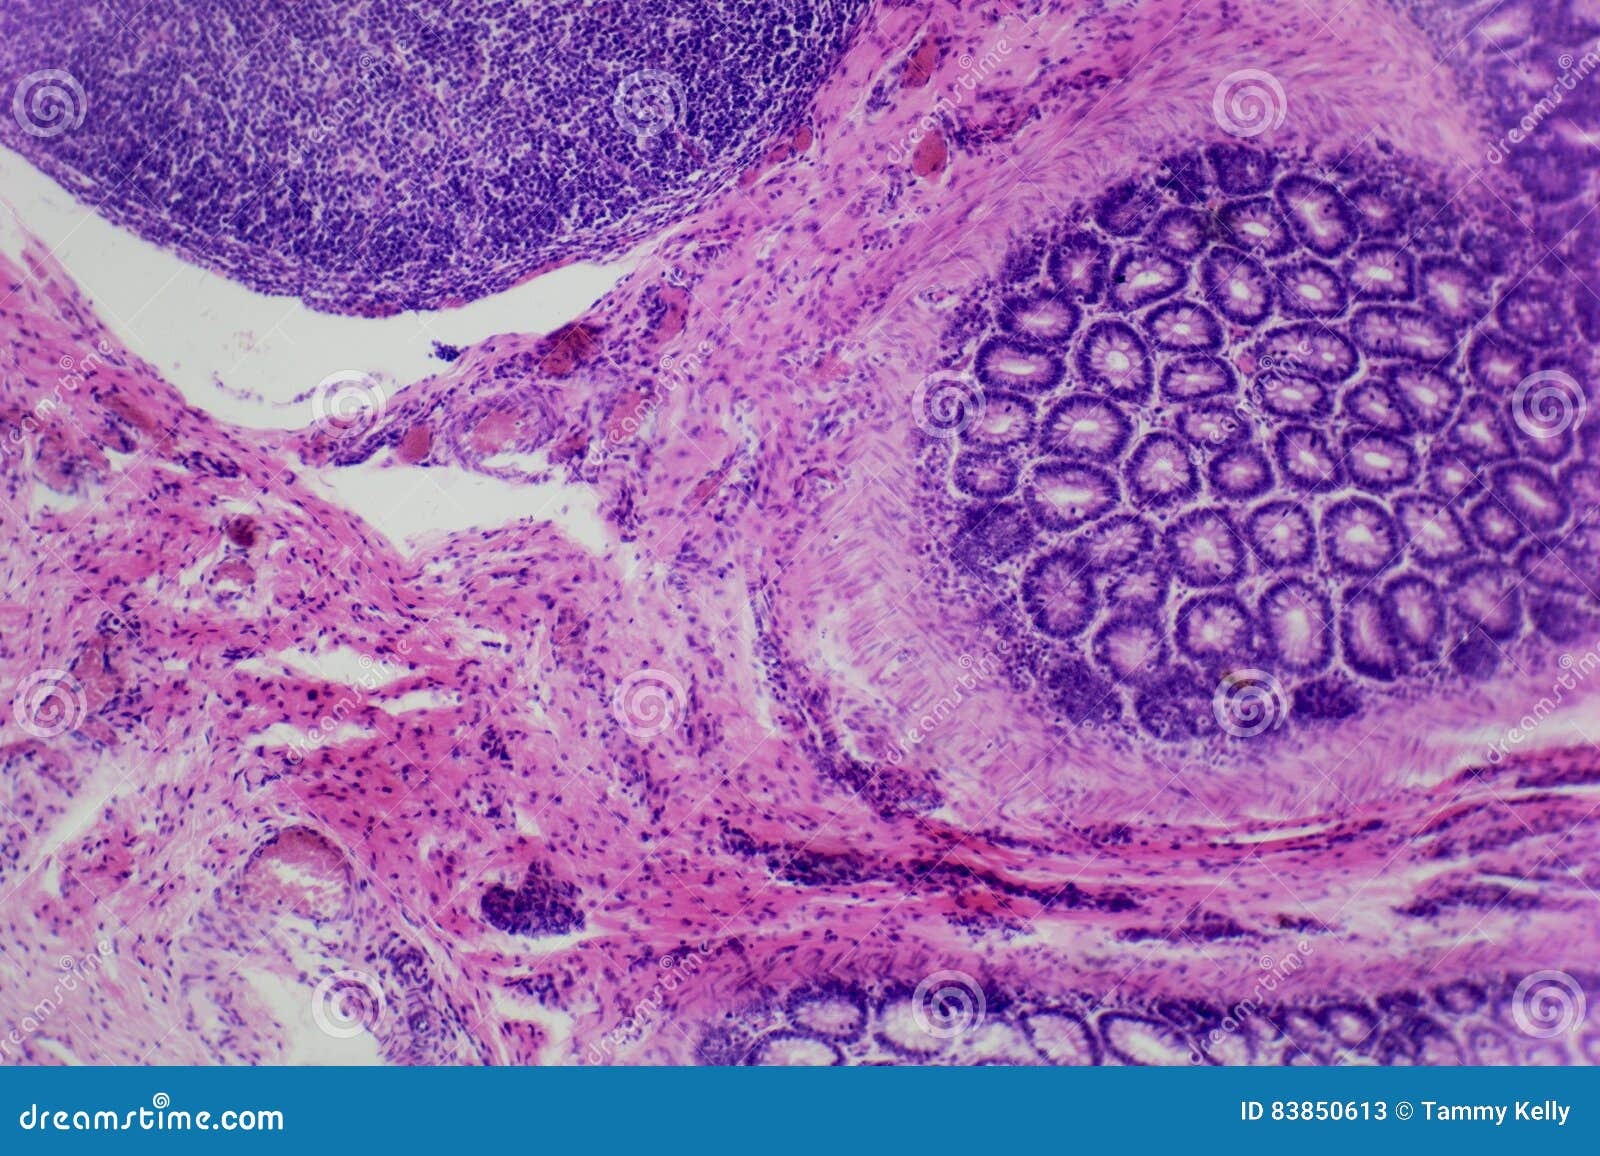 Microscopic Photo of Animal Cells Stock Image - Image of microscope, slide:  83850613